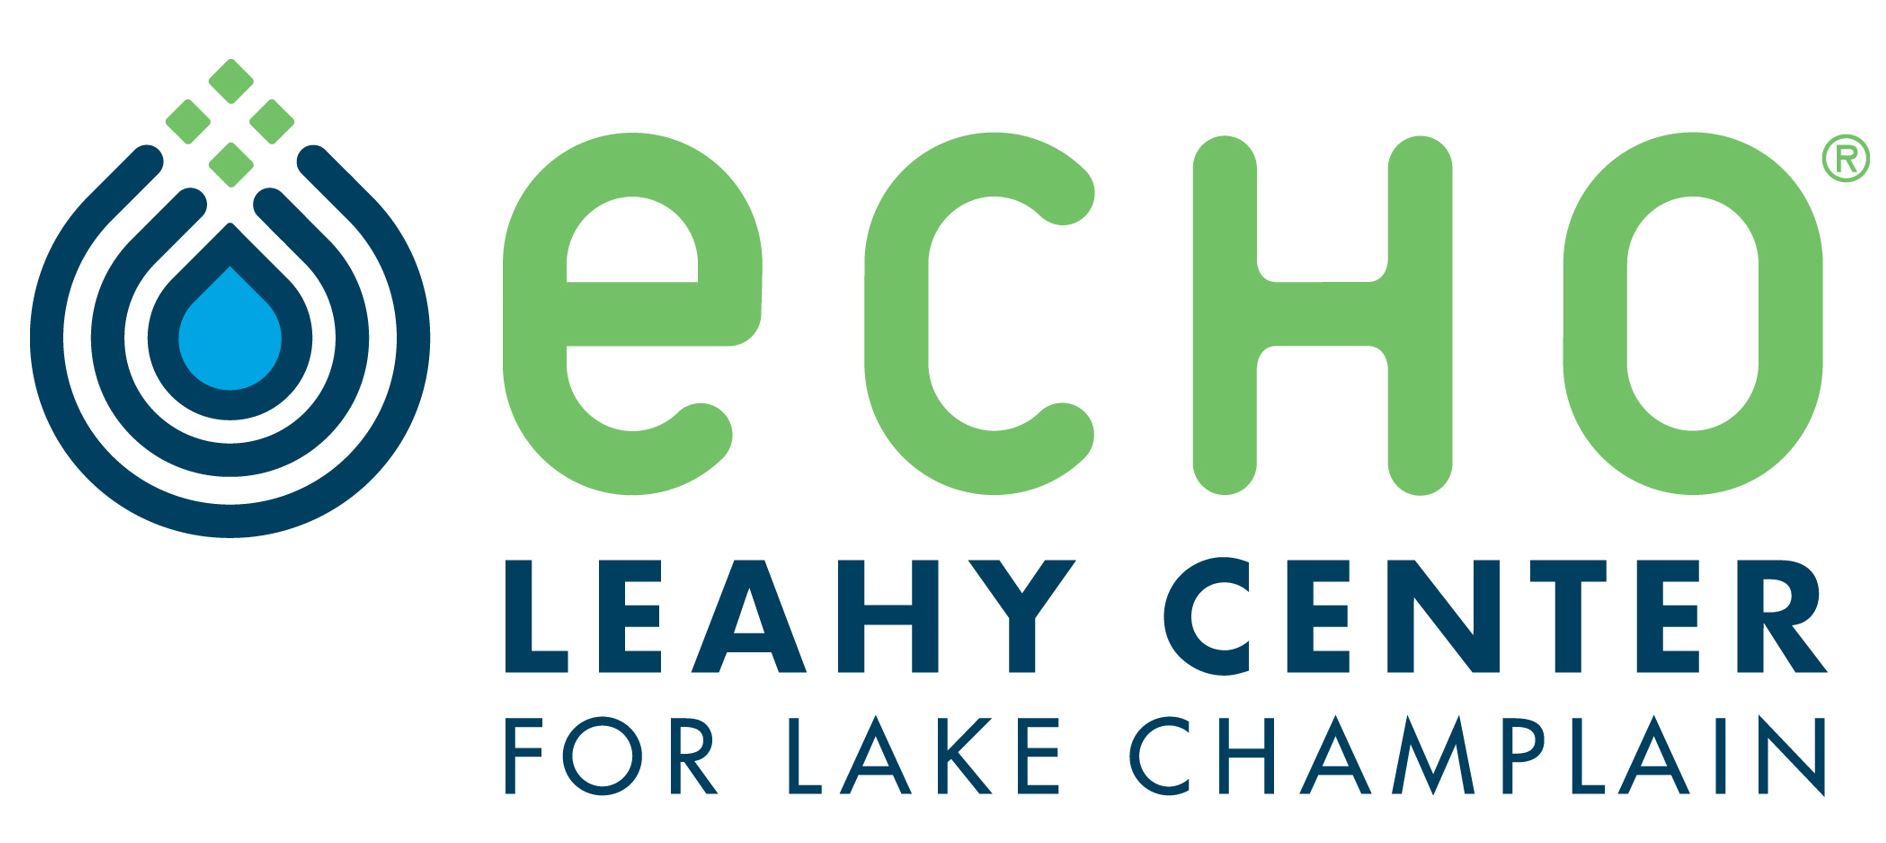 ECHO, Leahy Center for Lake Champlain